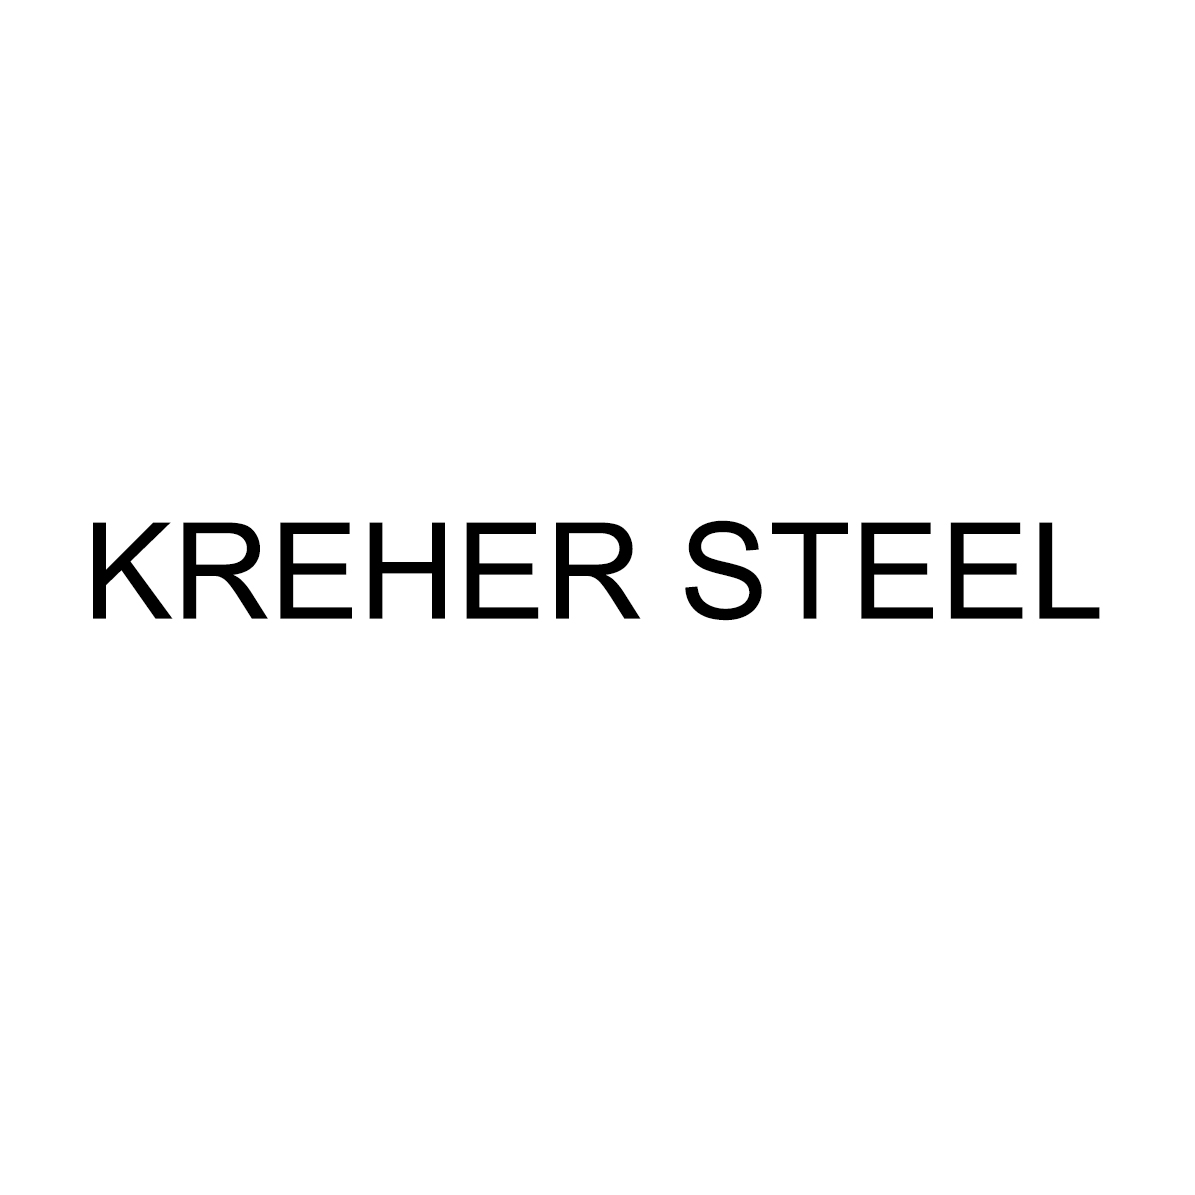 Kreher Steel logo